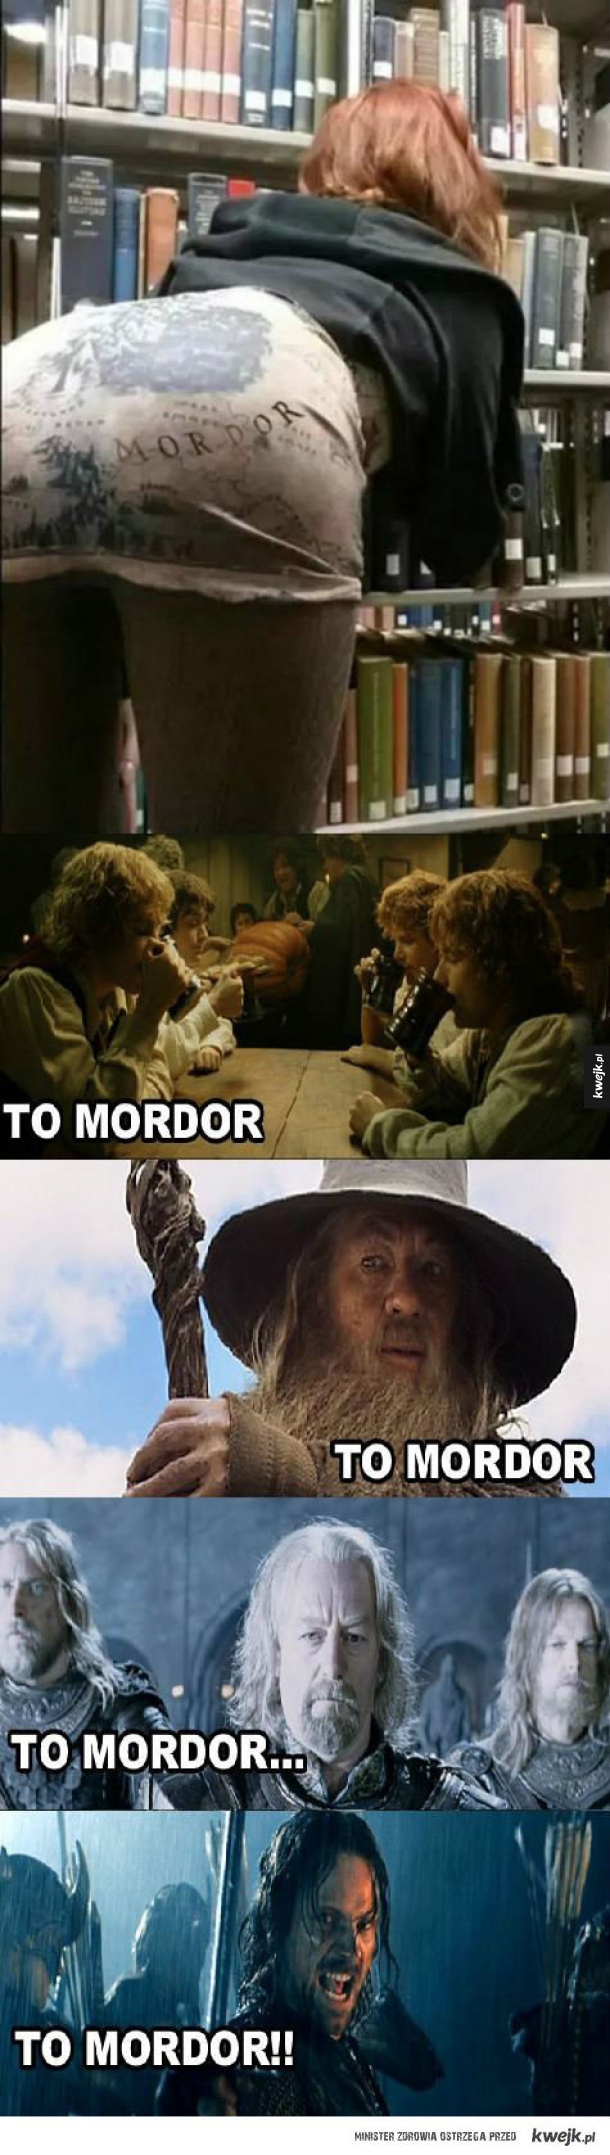 To Mordor!